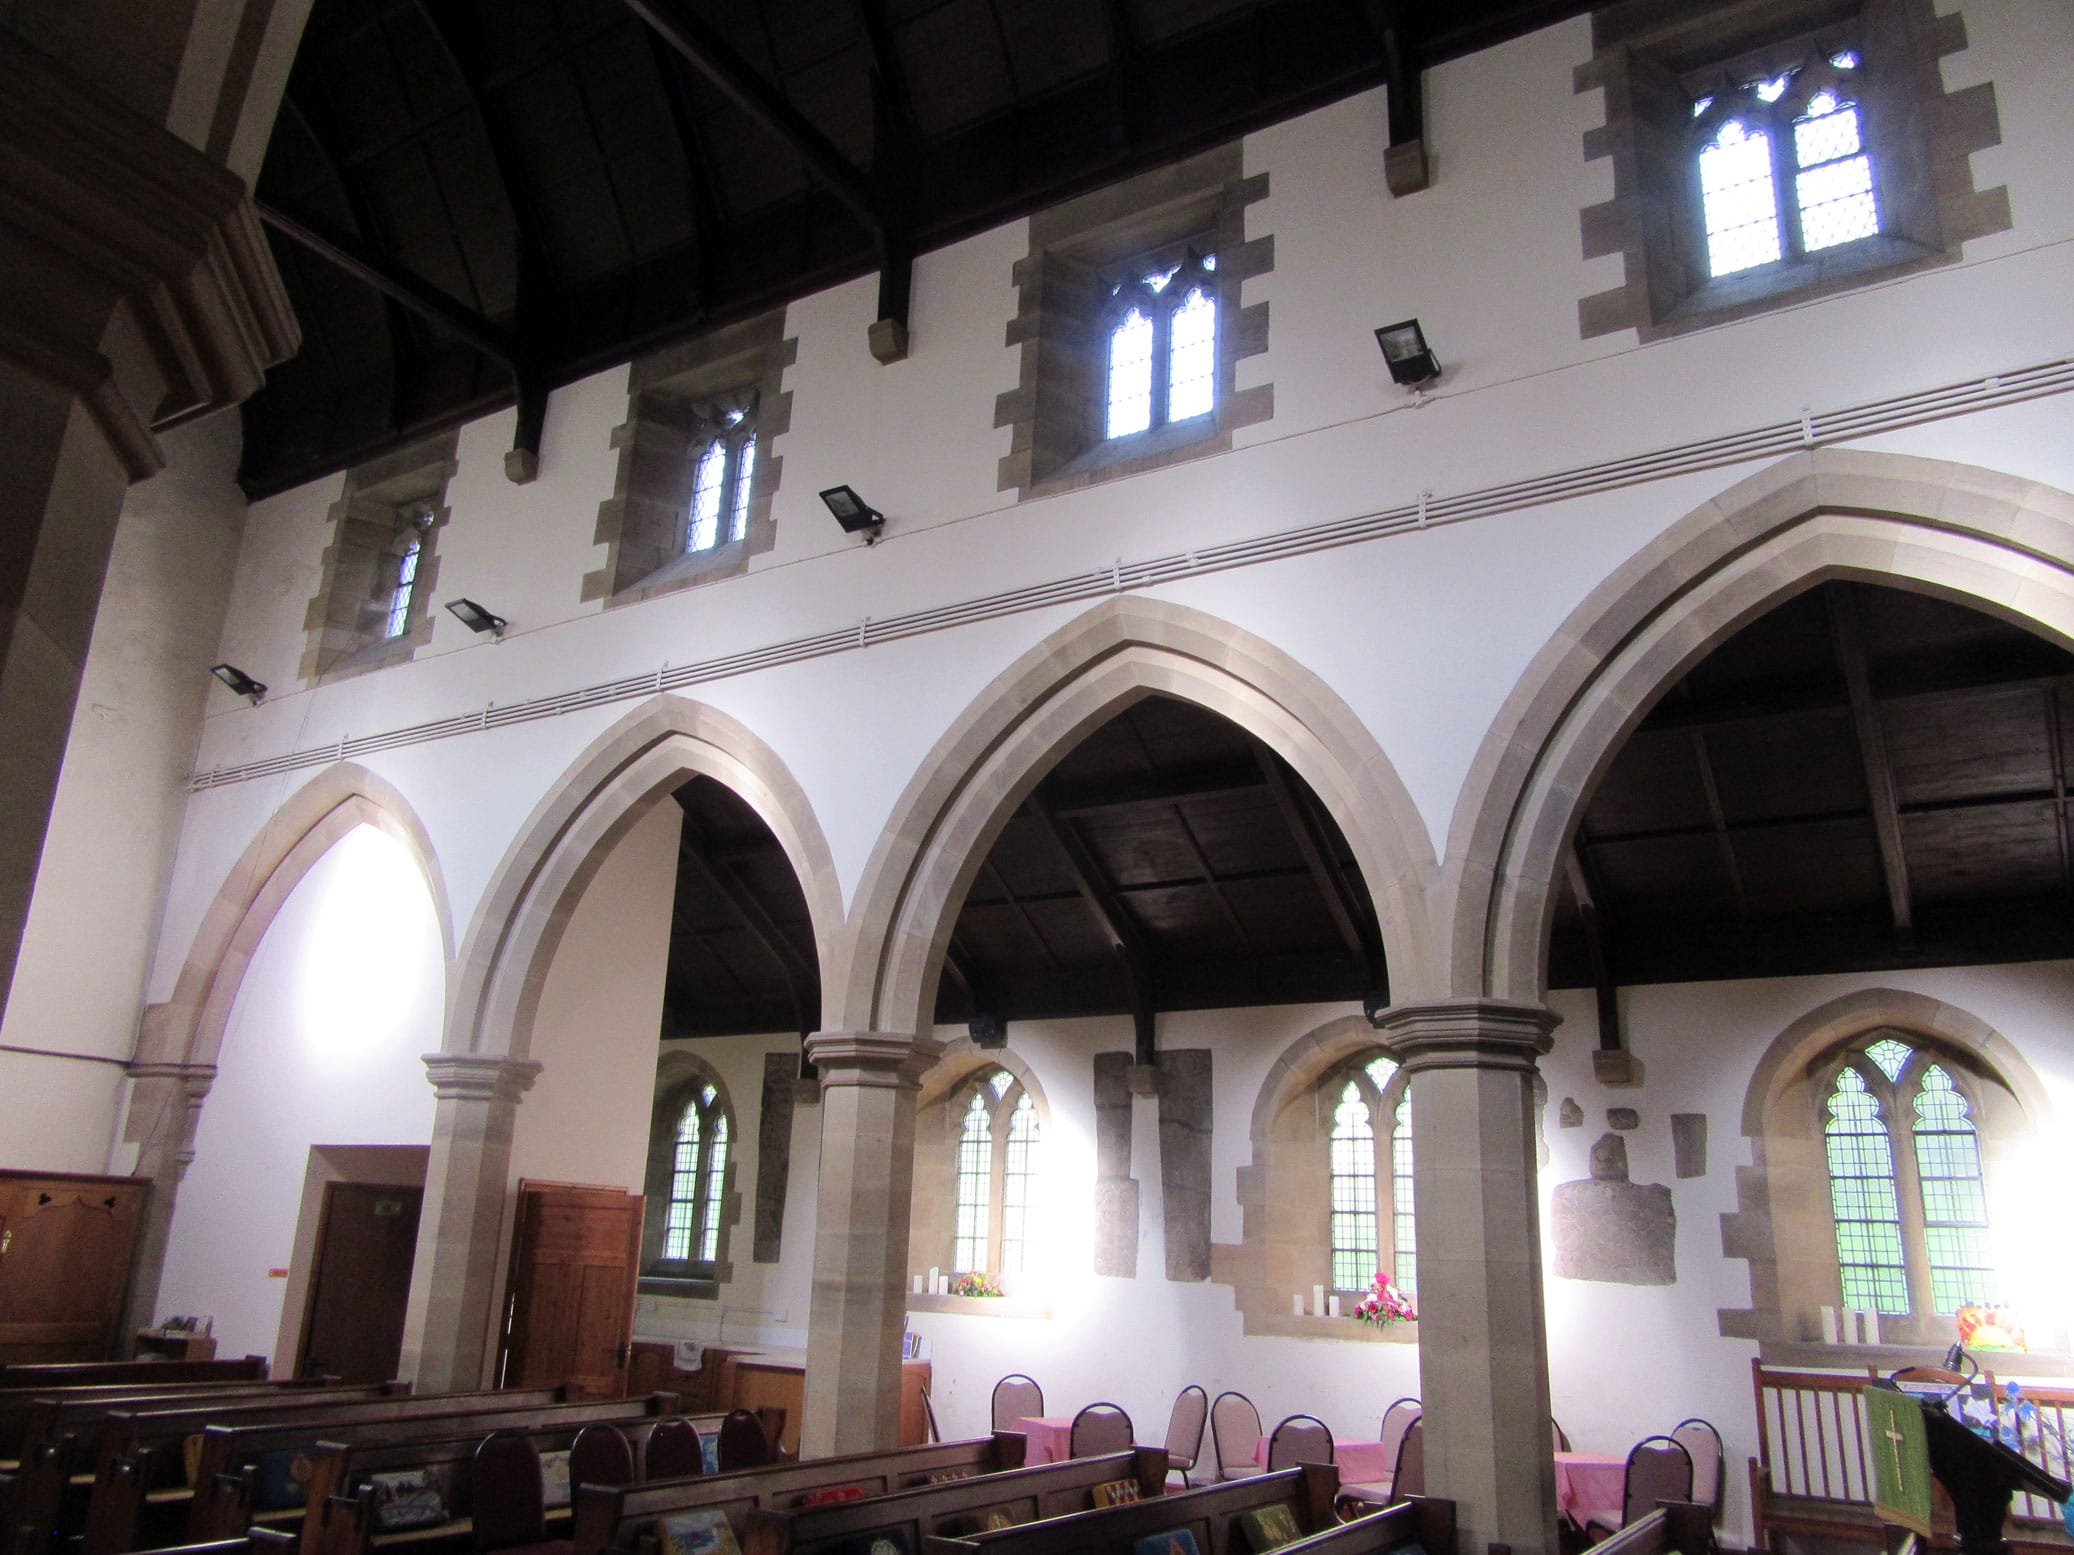 St Mary's Clerestory Windows North Aisle